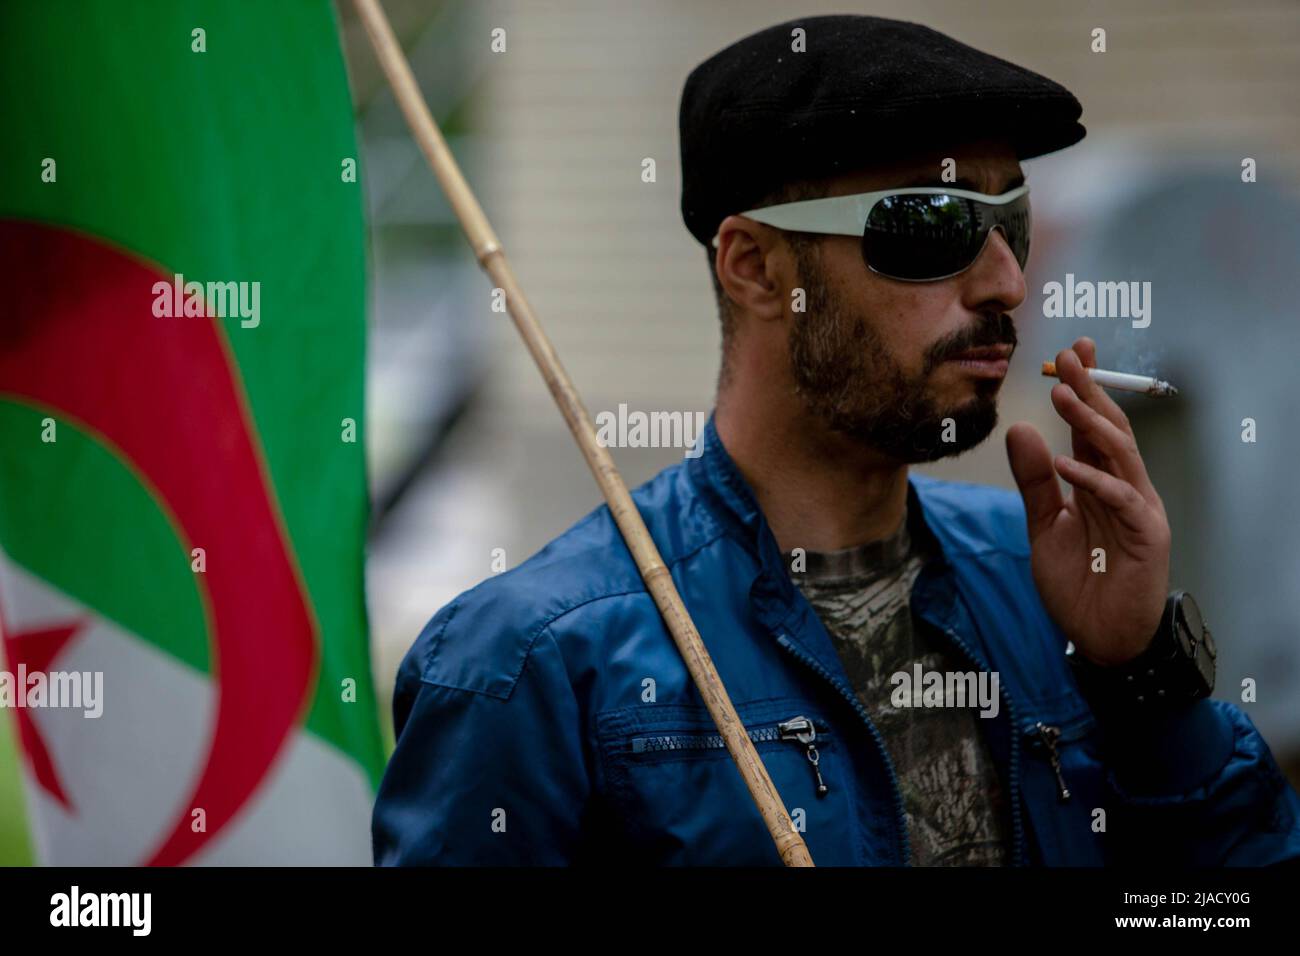 An Algerian protester hold the Algerian flag as he smokes a